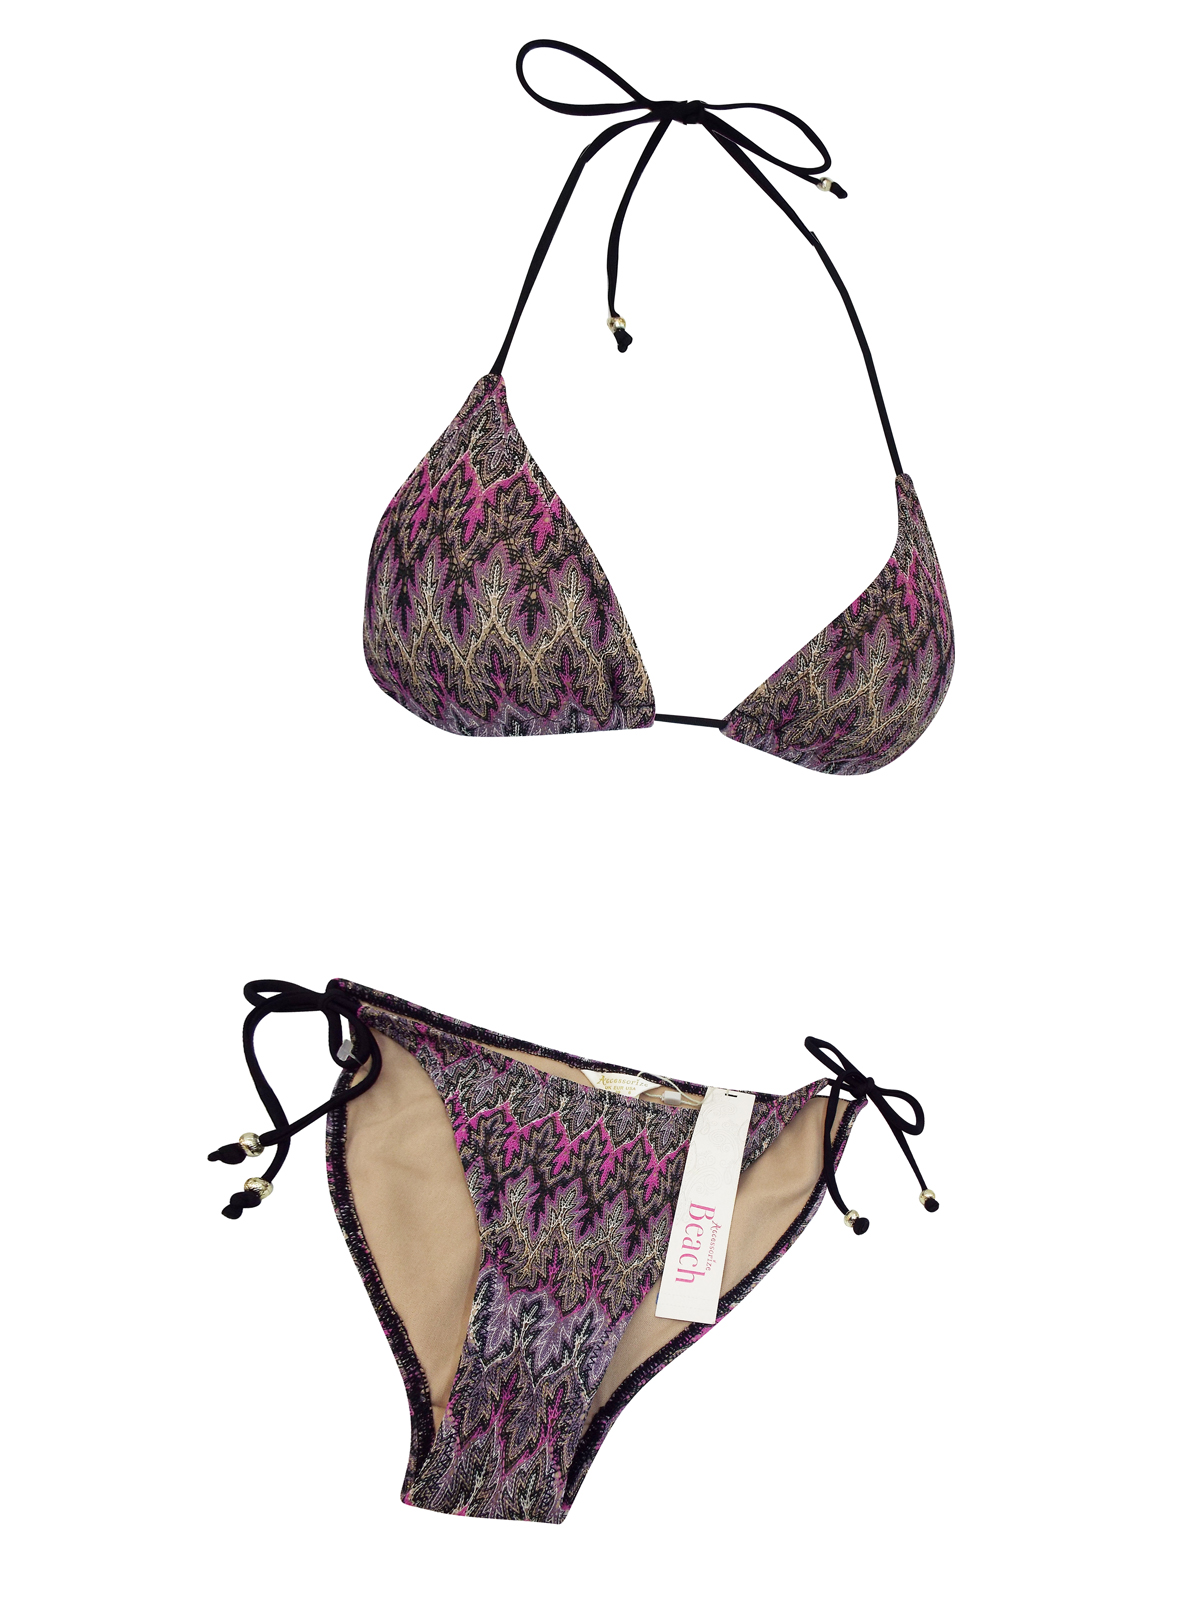 Accessorize PURPLE Crochet Knit Triangle Bikini Set - Size 6 to 16